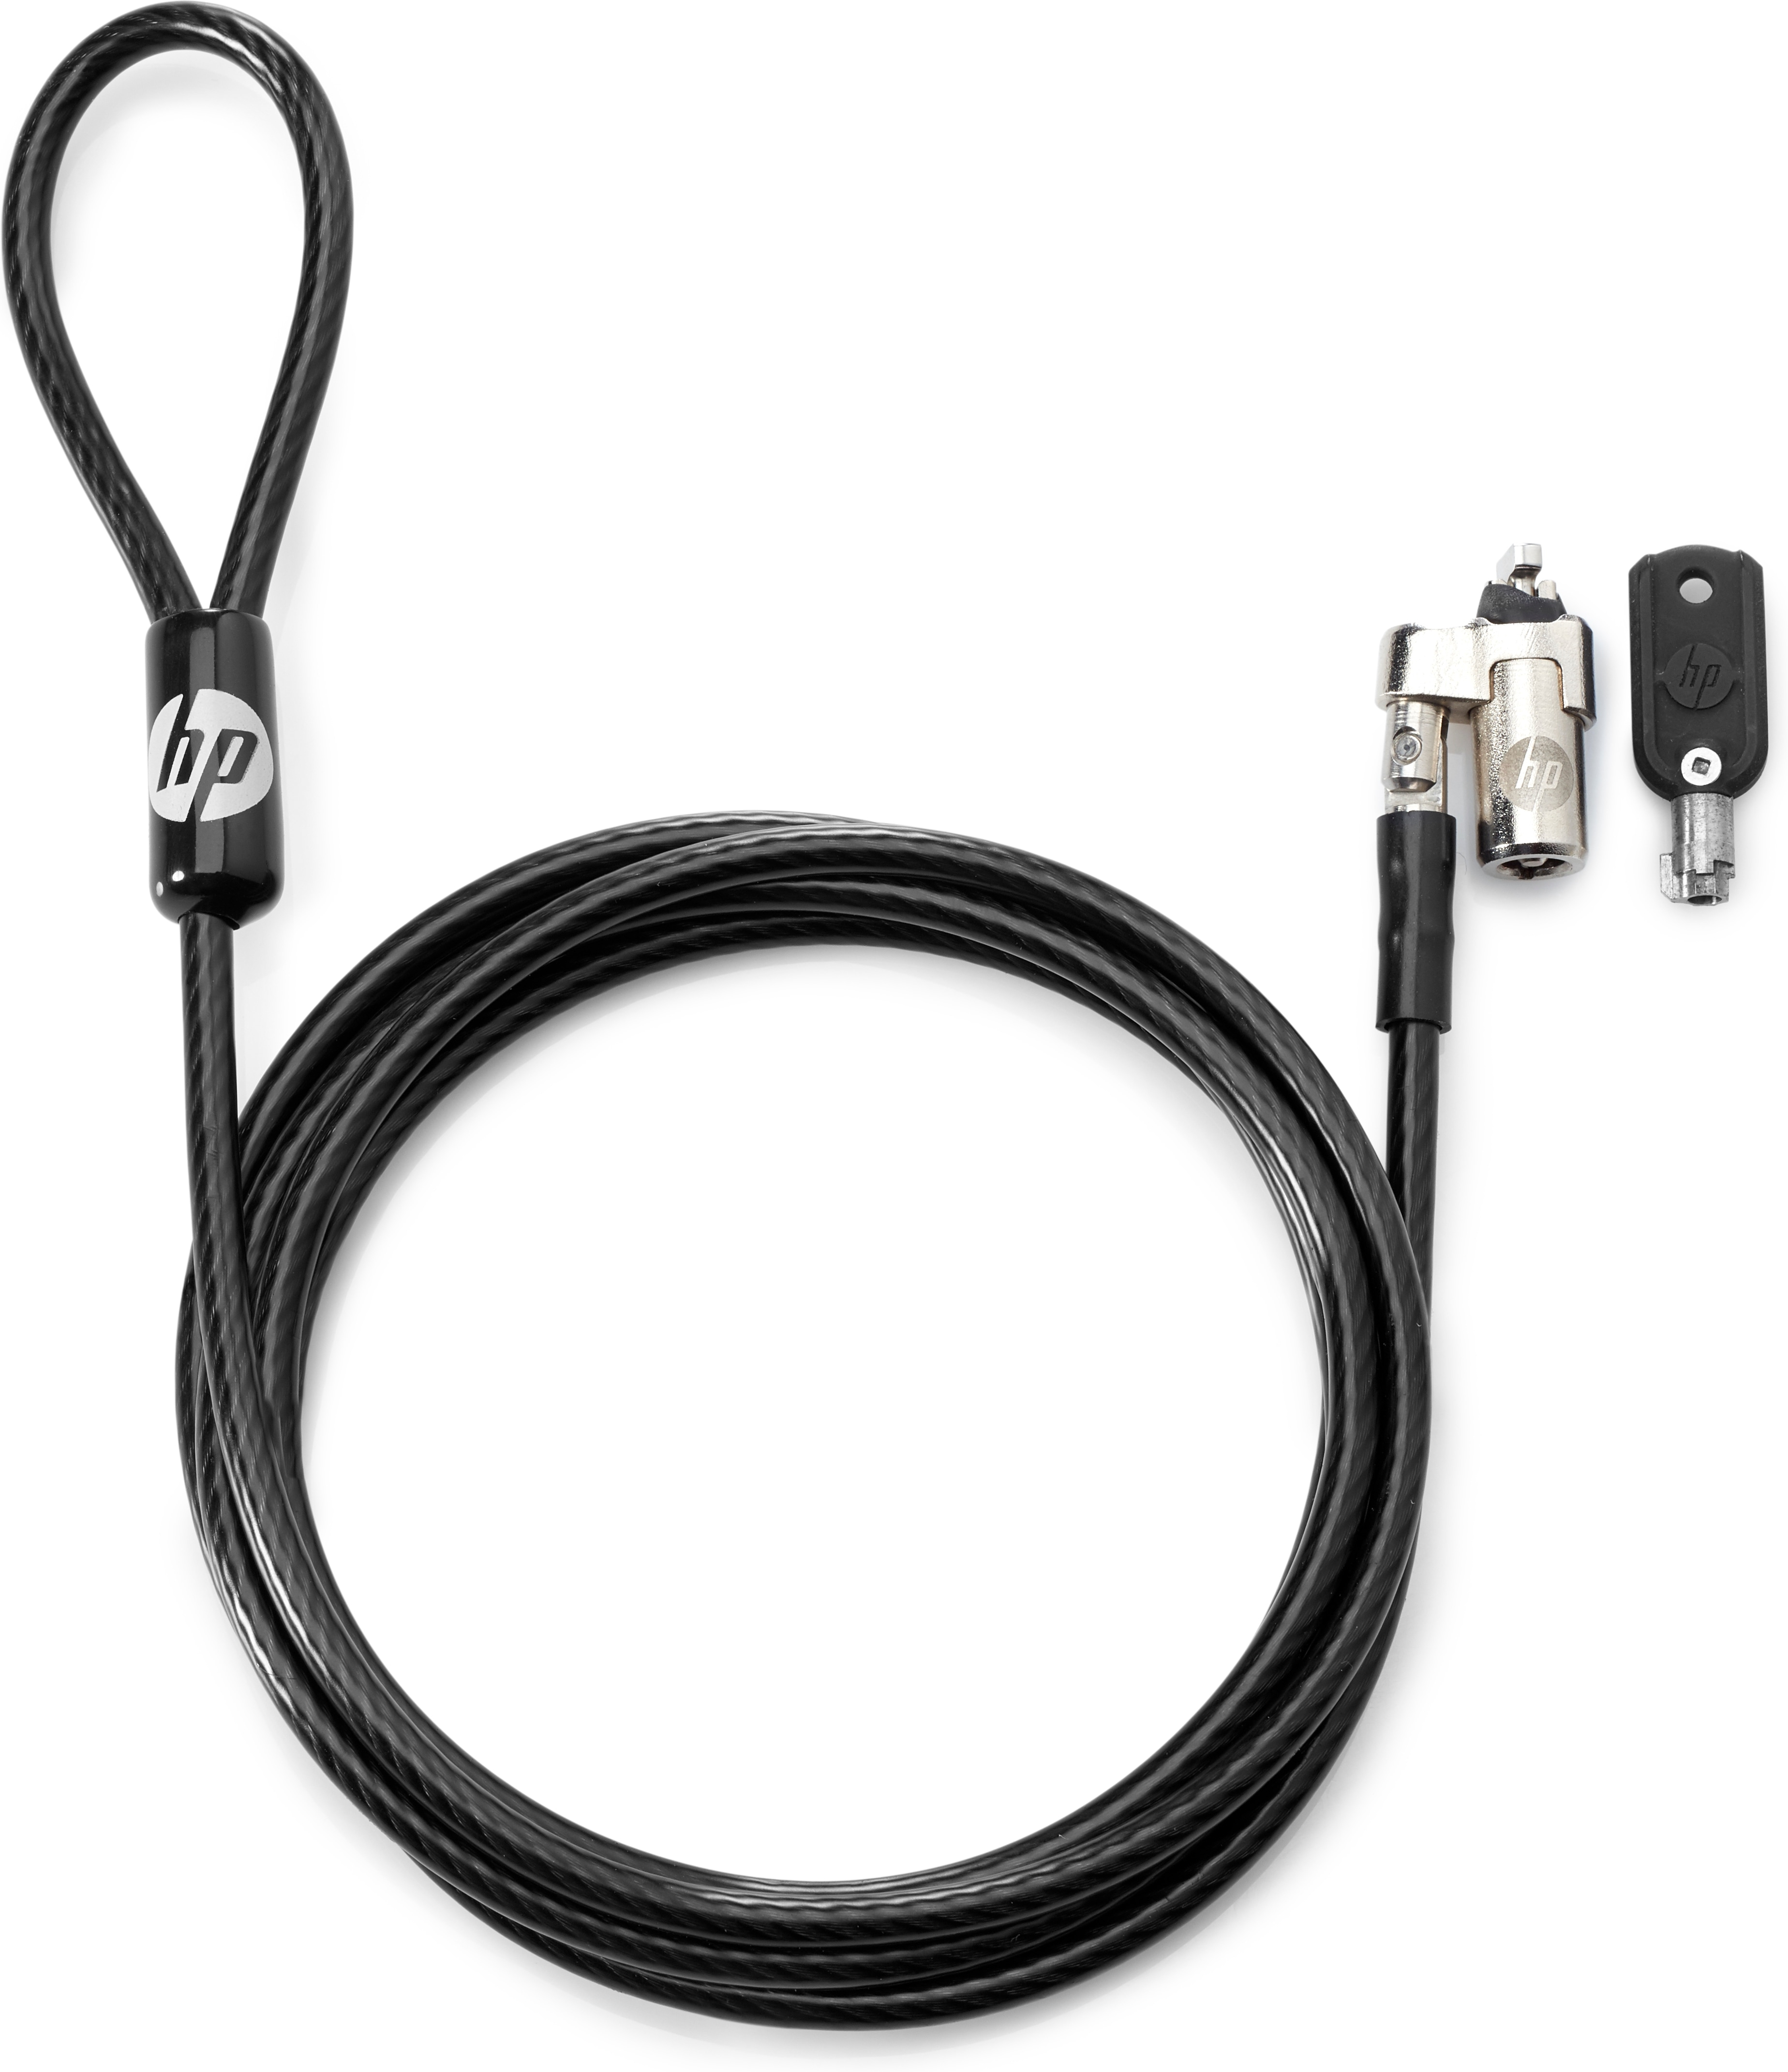 HP Keyed Cable Lock - Sicherheitskabelschloss